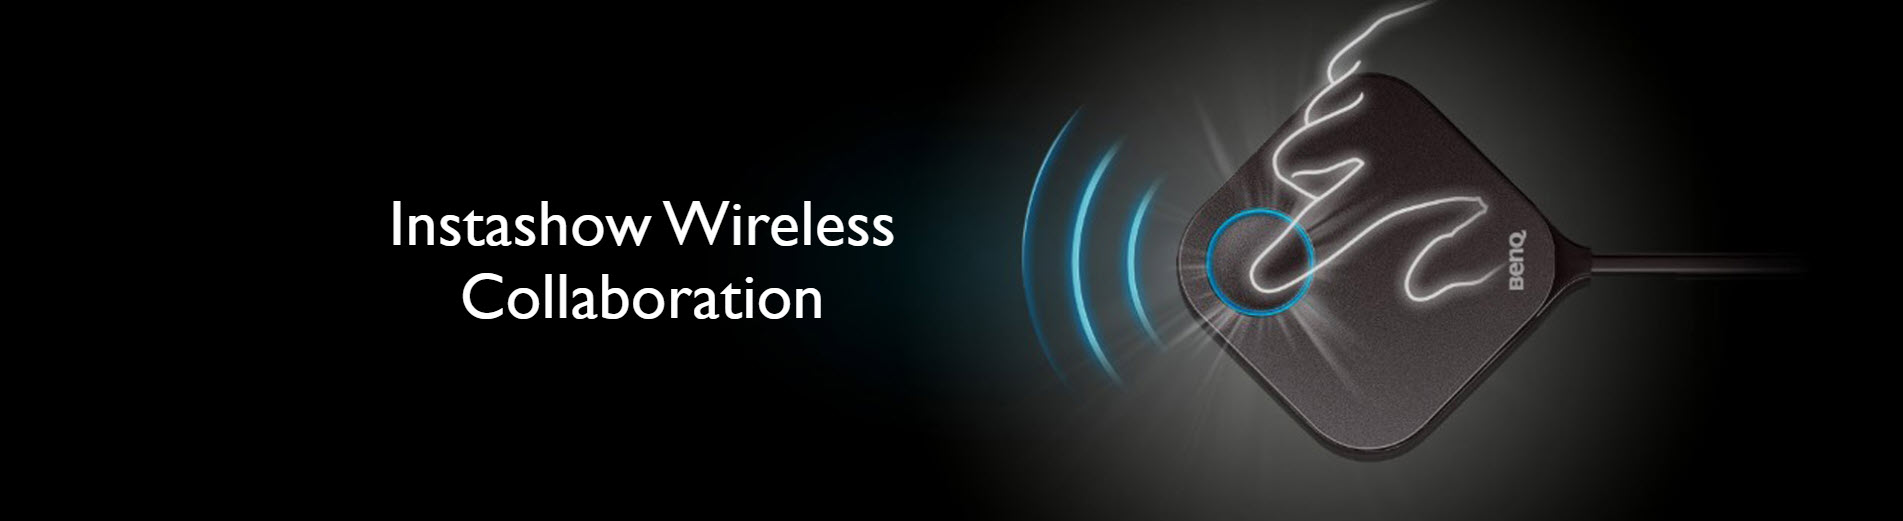 BenQ Instashow Wireless Collaboration